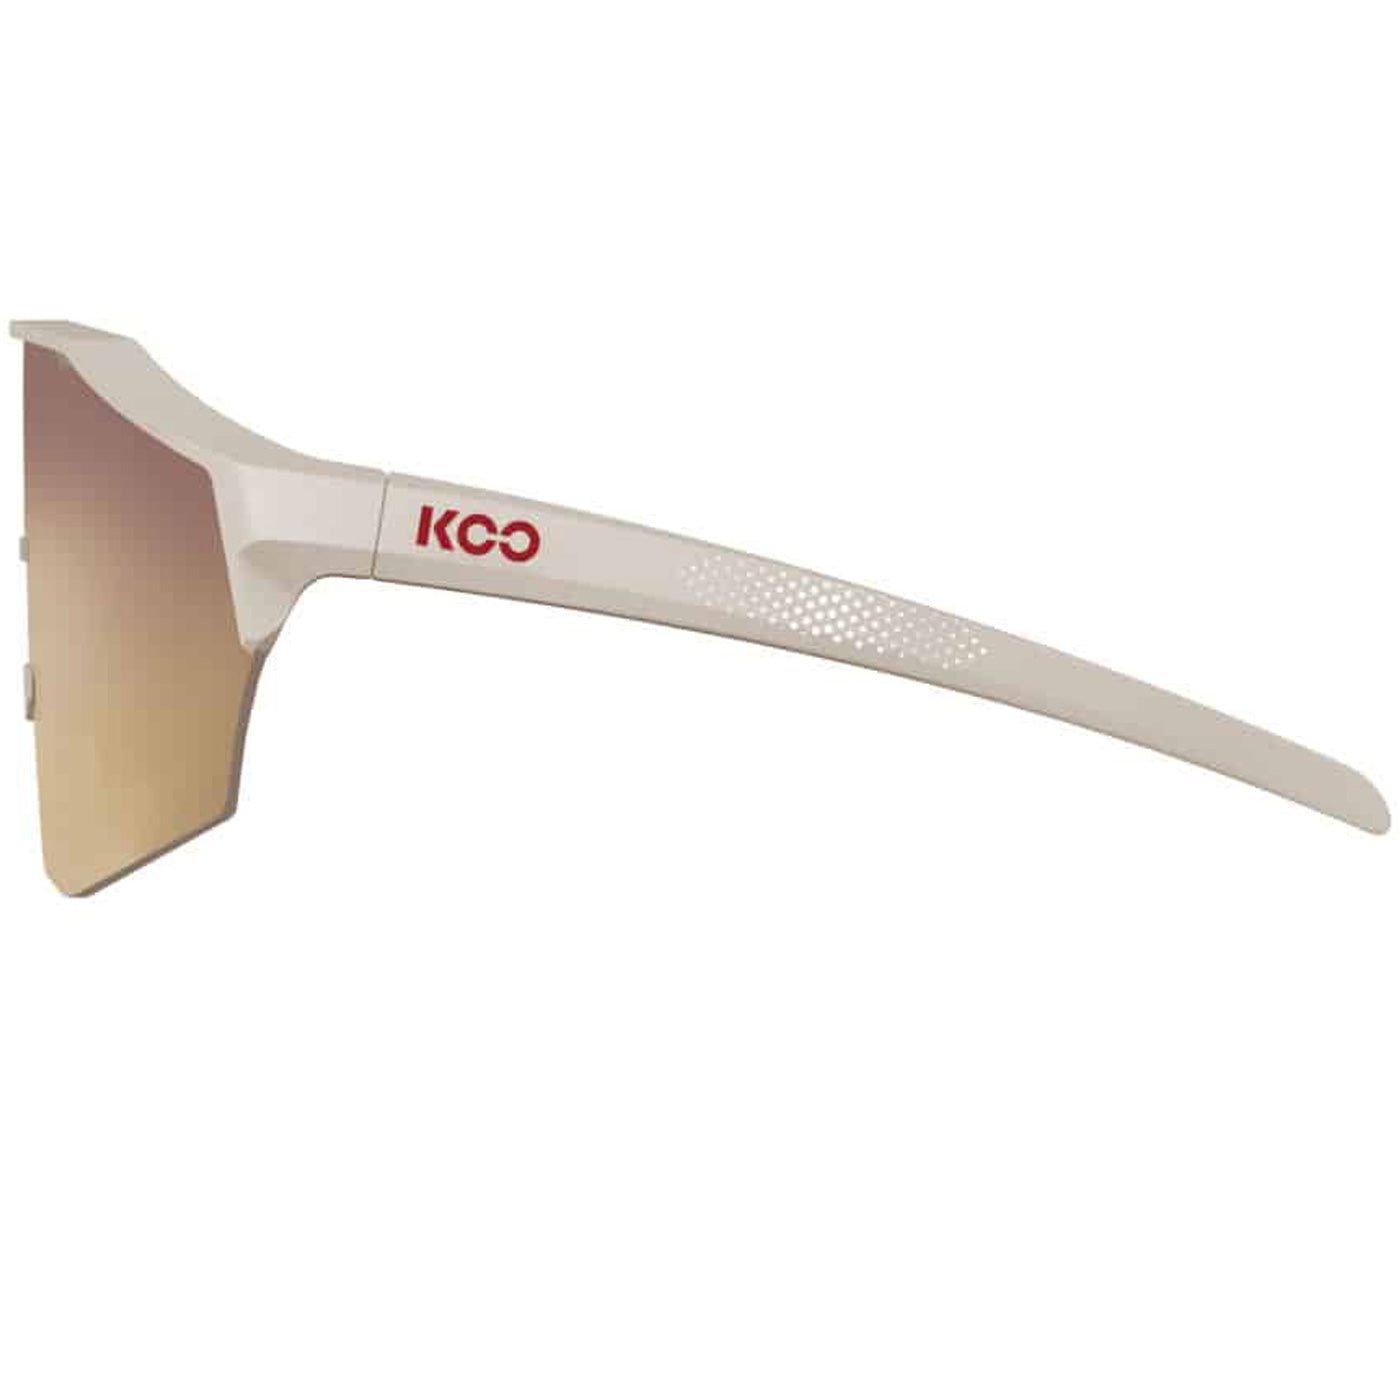 KOO Alibi Strade Bianche sunglasses - Light Dust Matt Sunrise